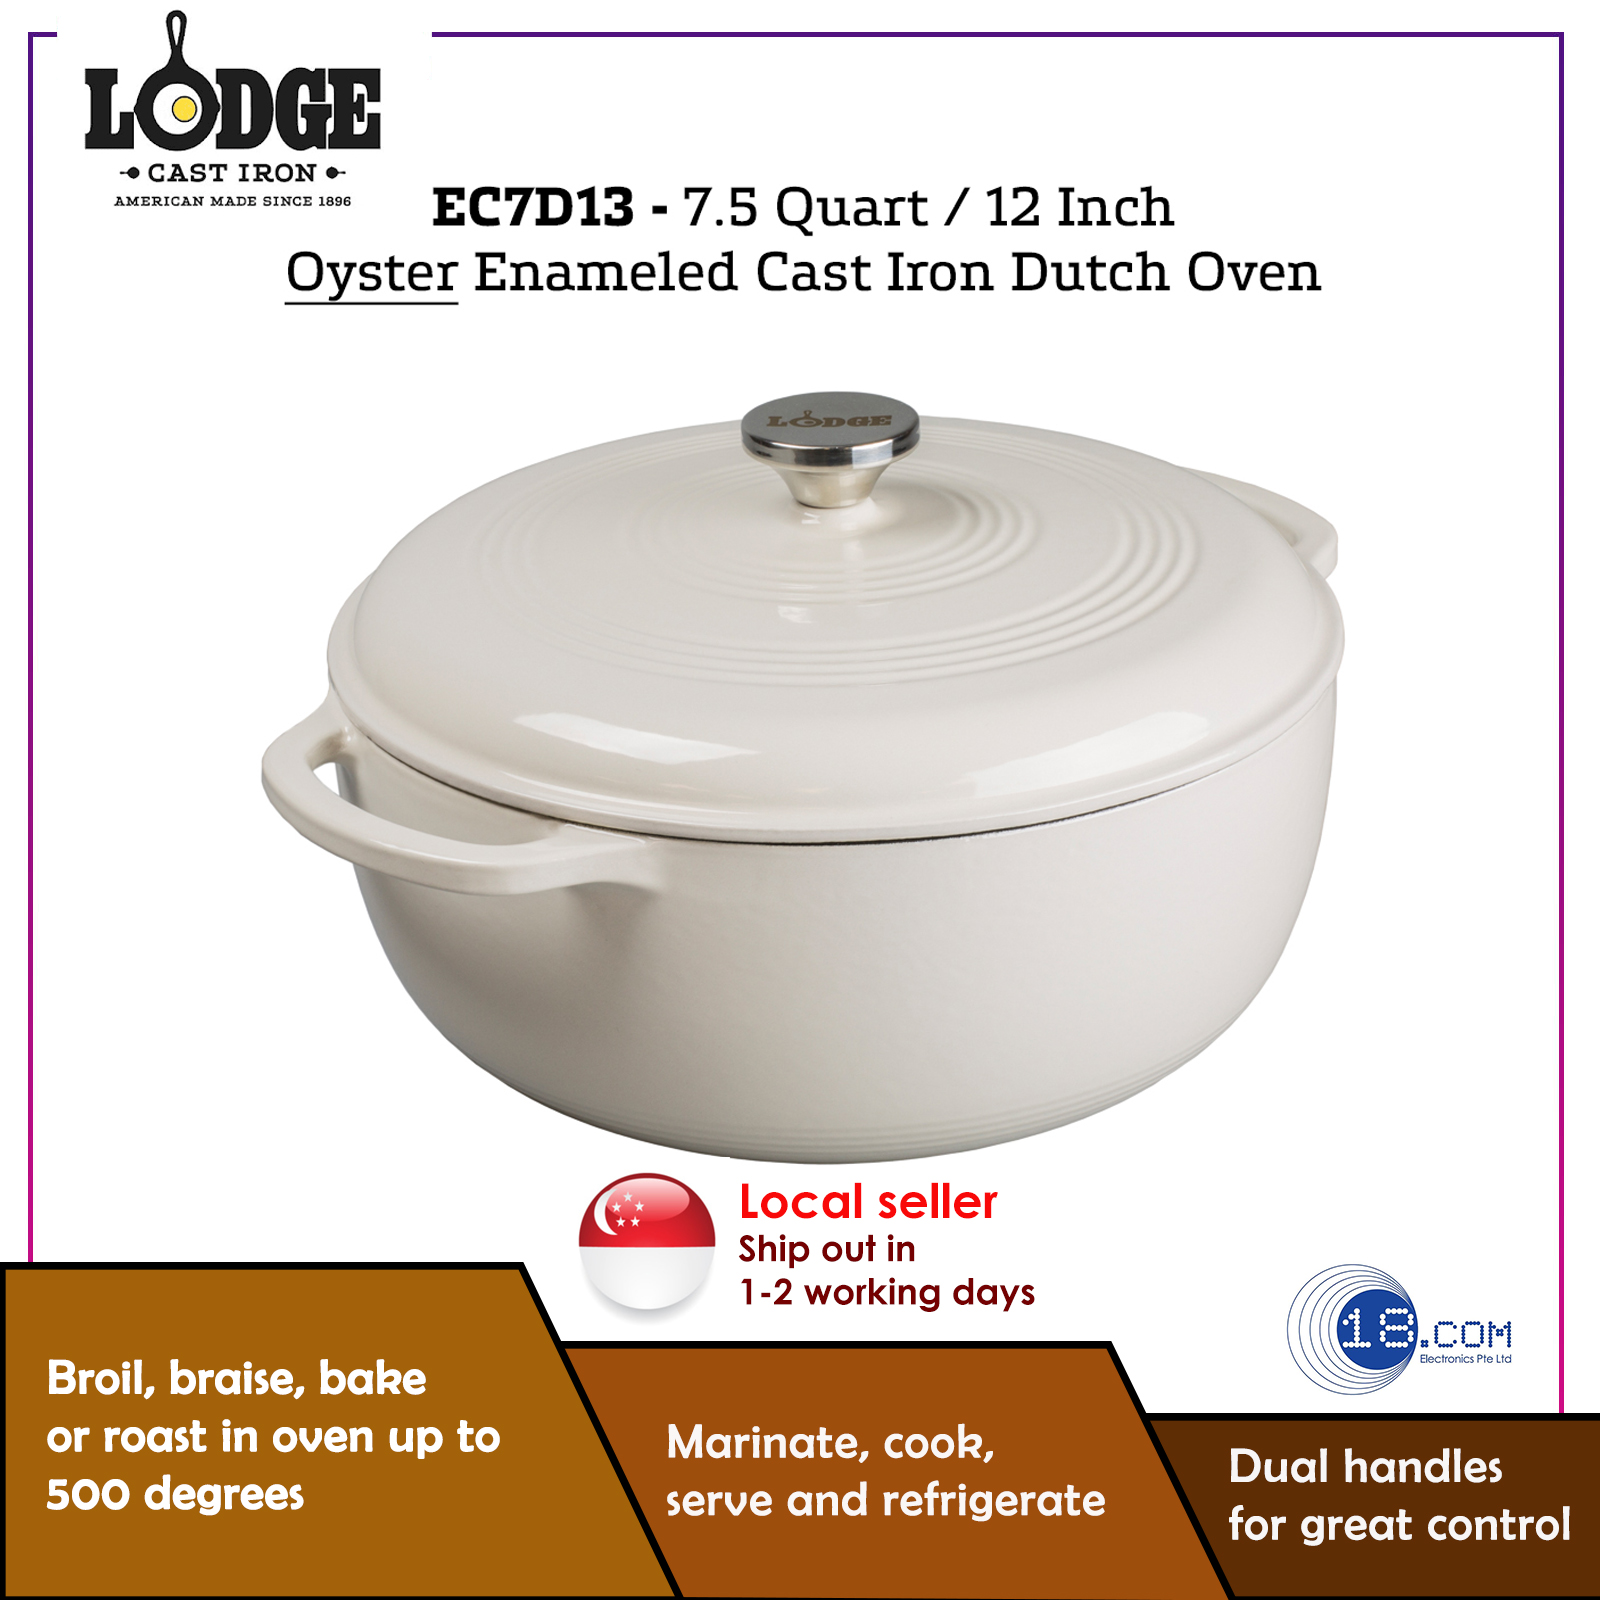 Lodge Manufacturing EC7D13 Oyster Enamel Cast Iron 7.5 Qt. Dutch Oven